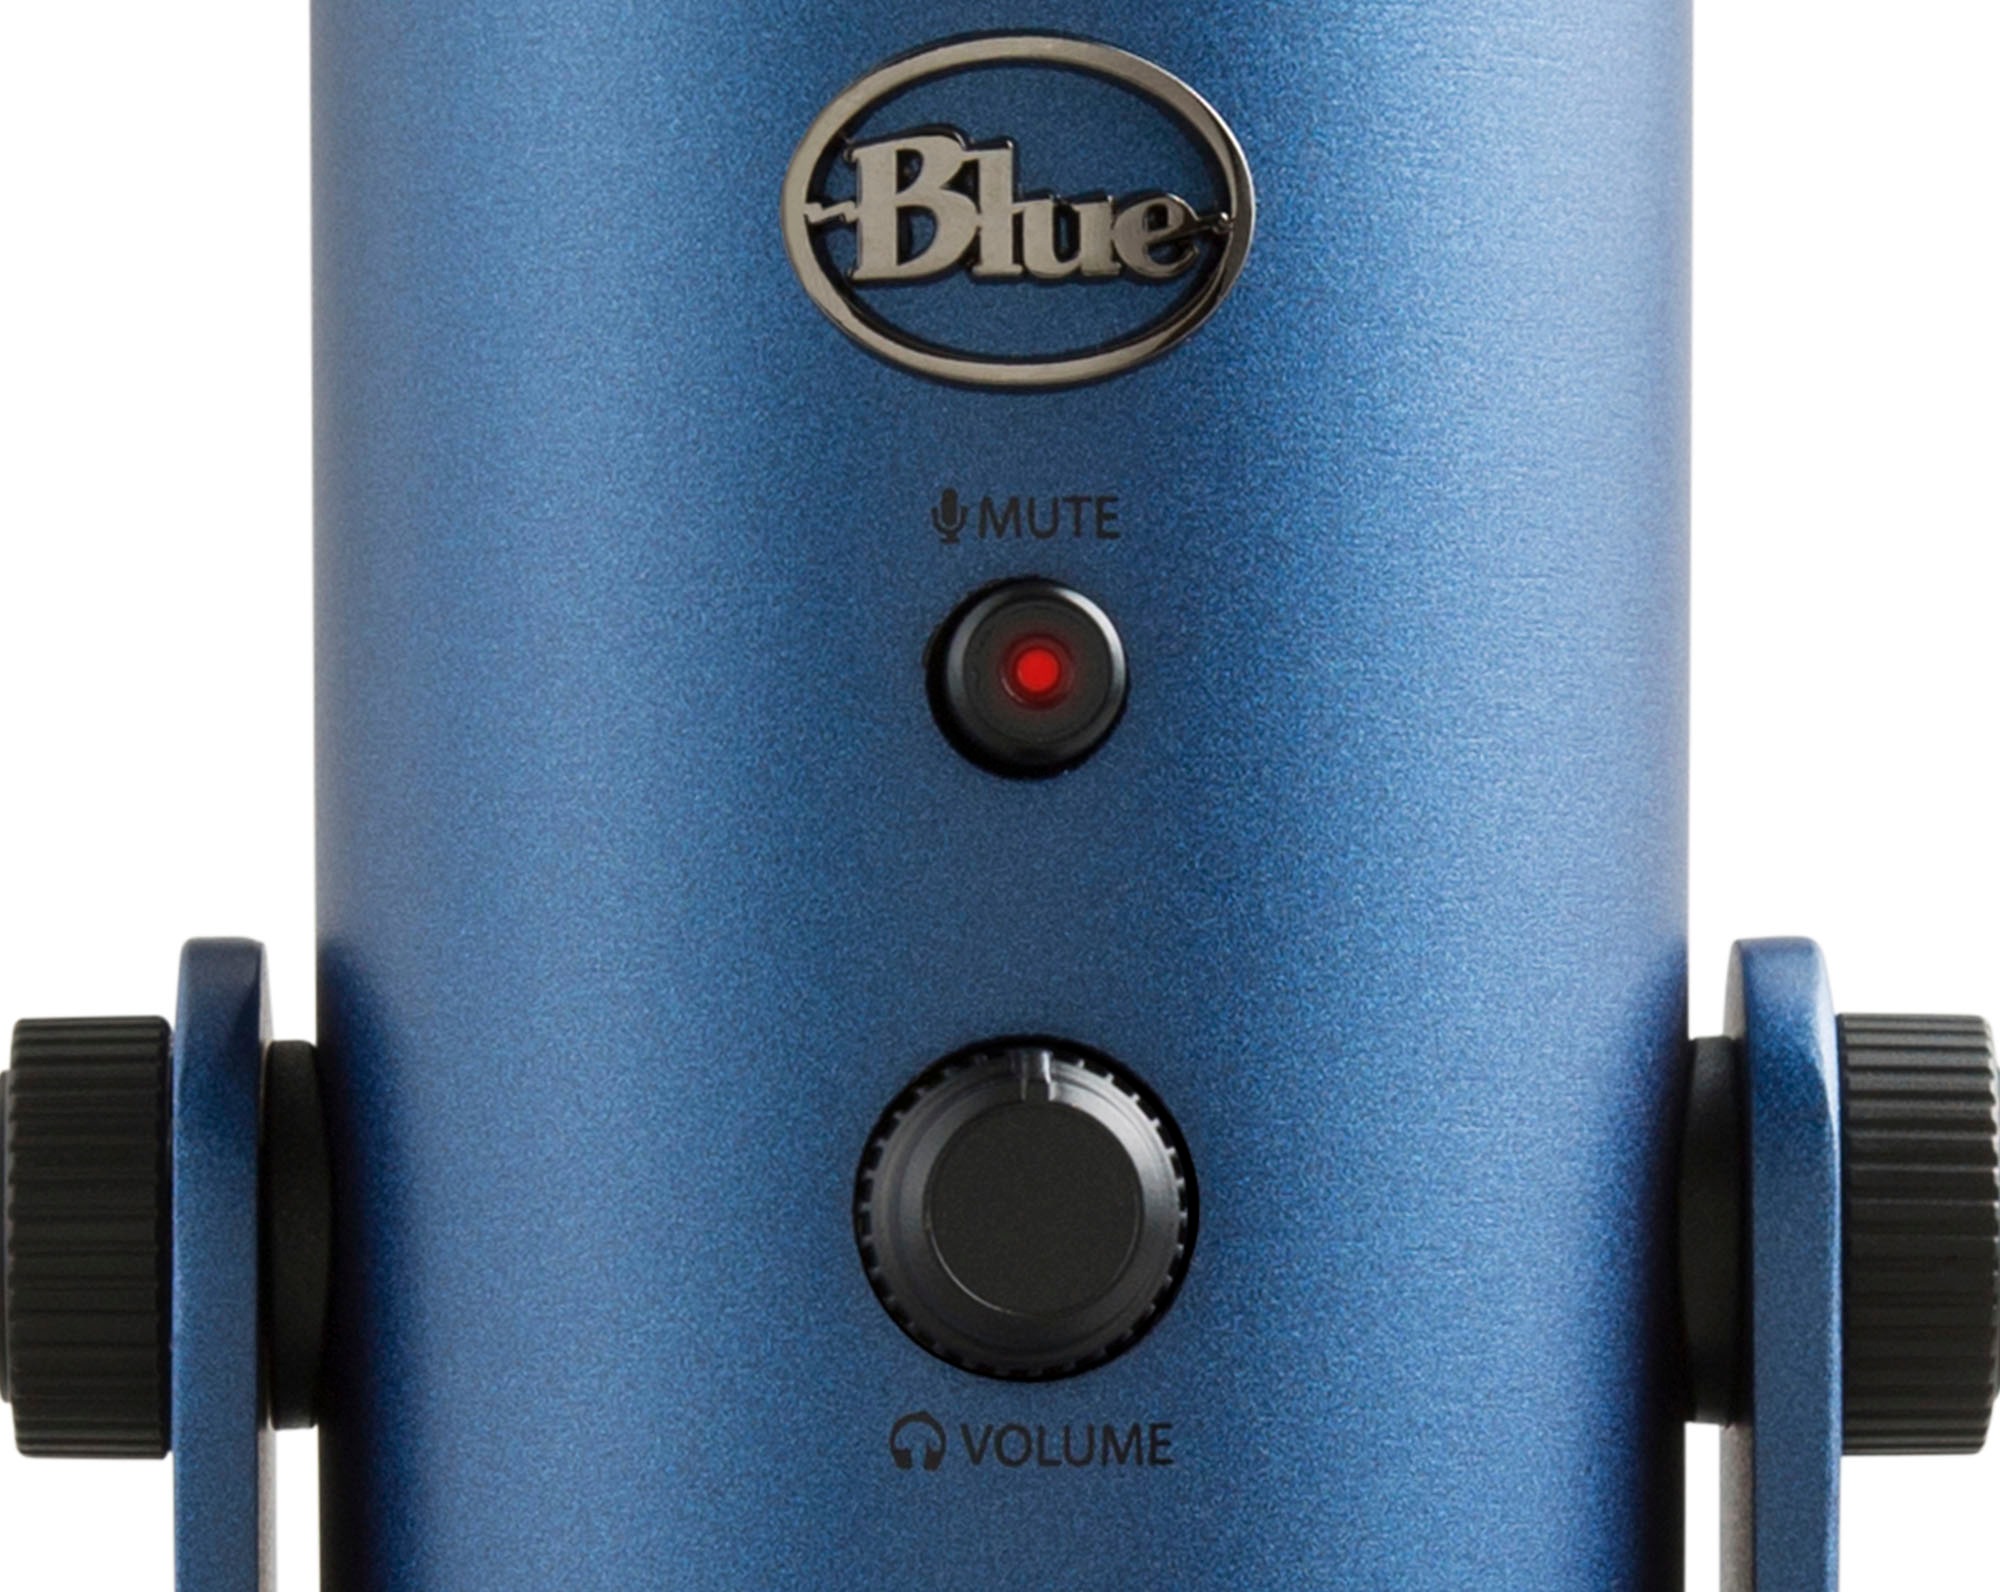 Blue Mikrofon »YETI«